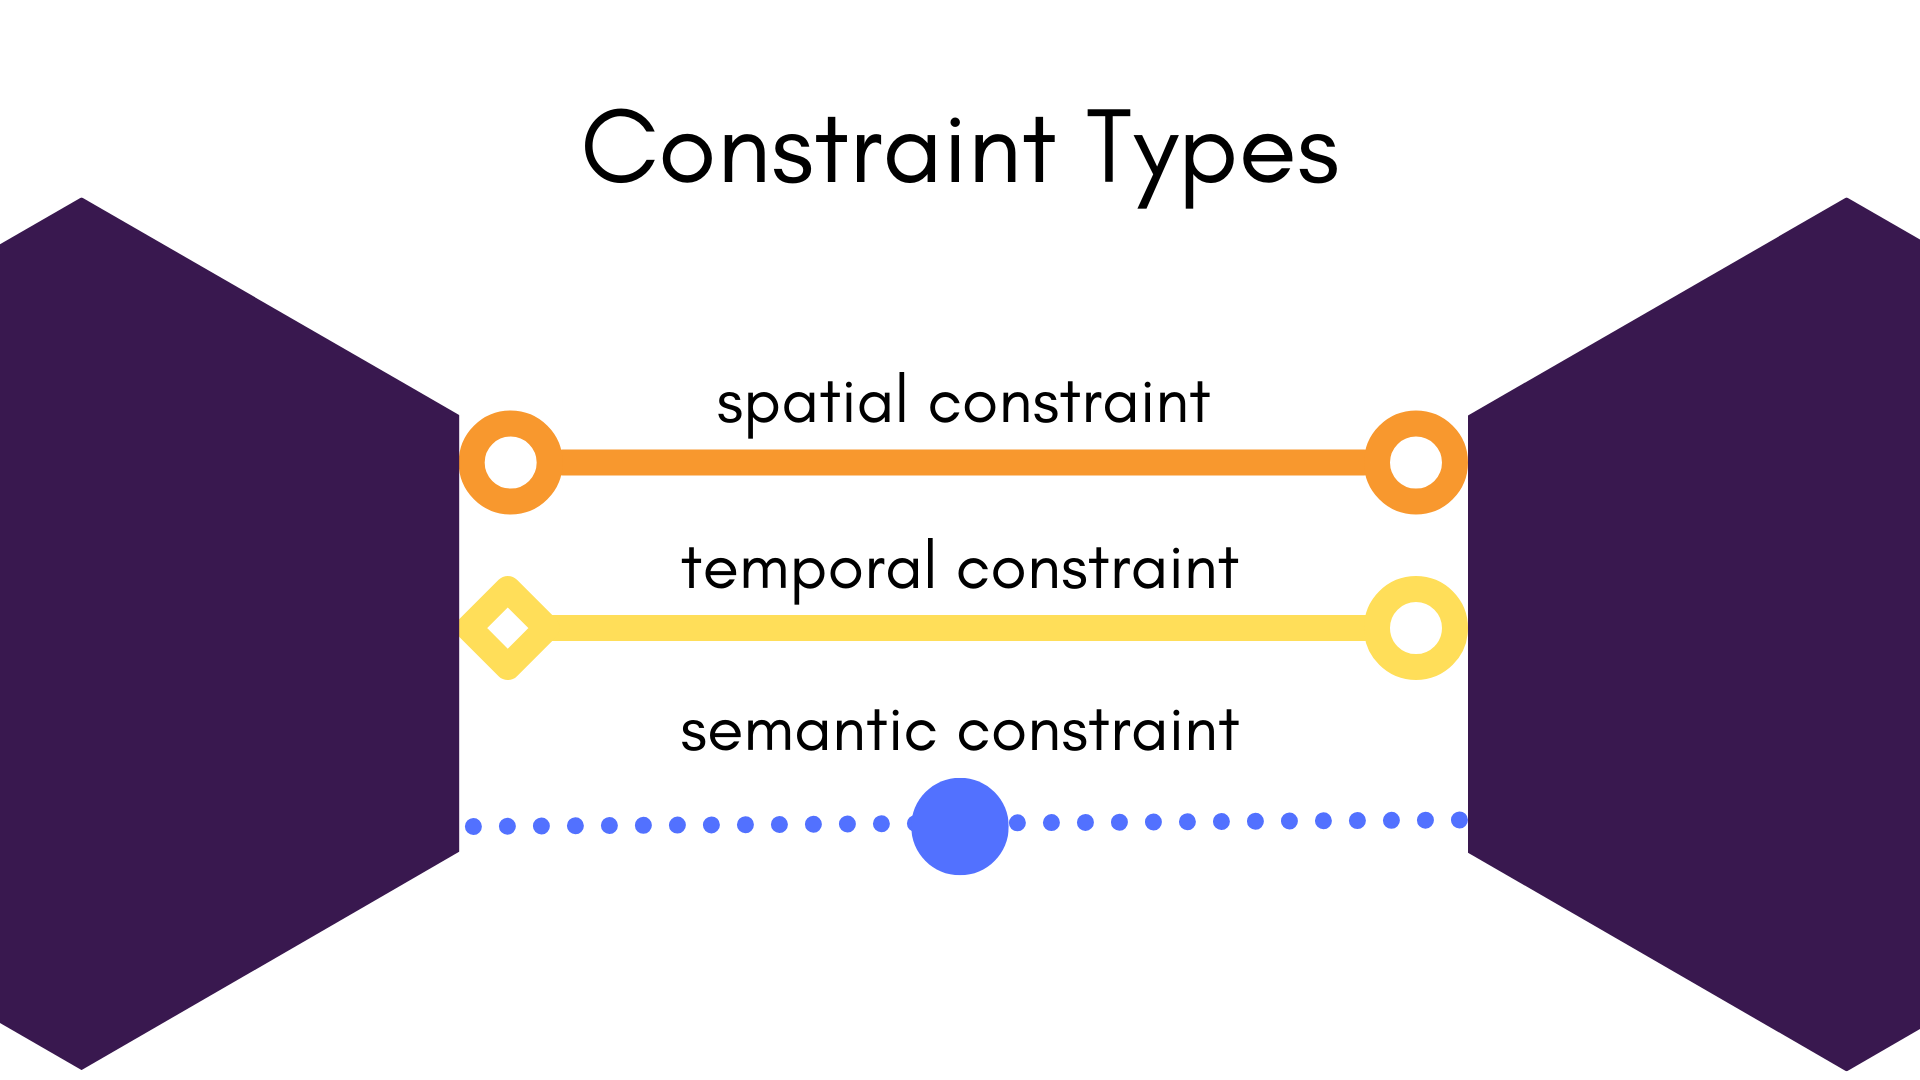 Constraint Types